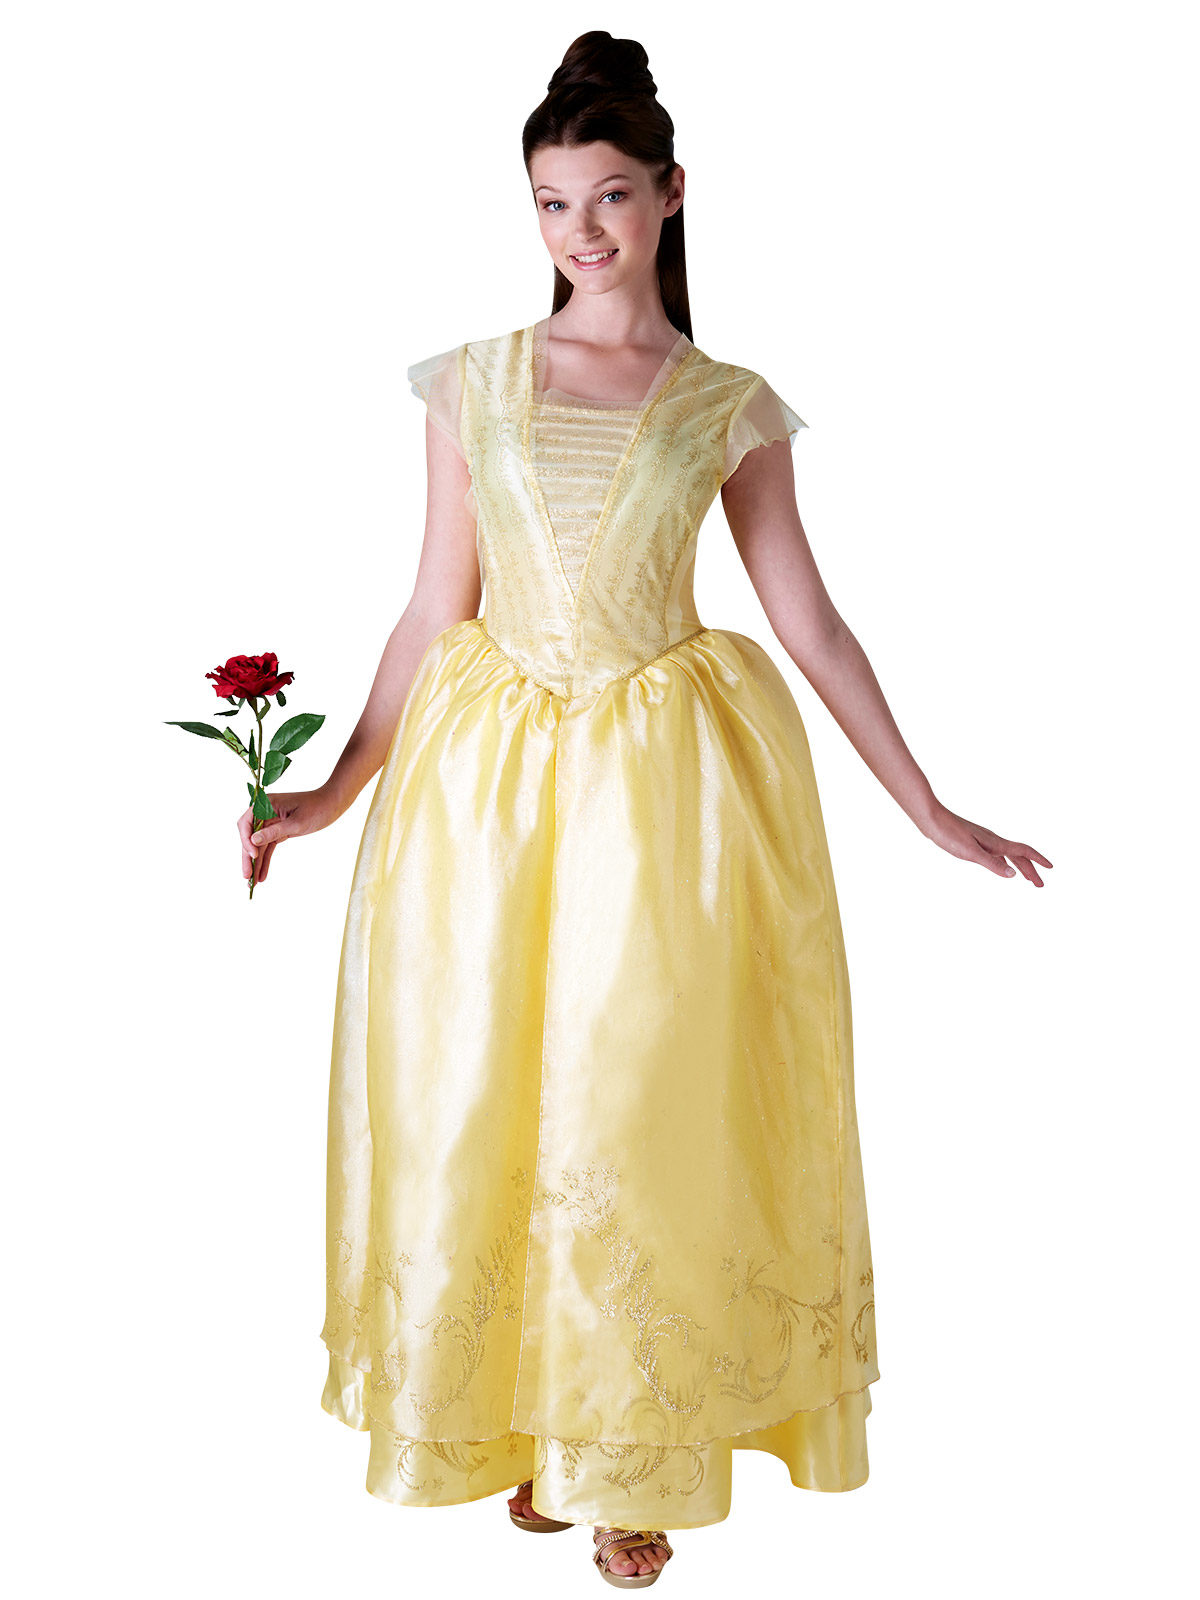 Belle Live Action Disney Princess Costume - Adult - Sunbury Costumes